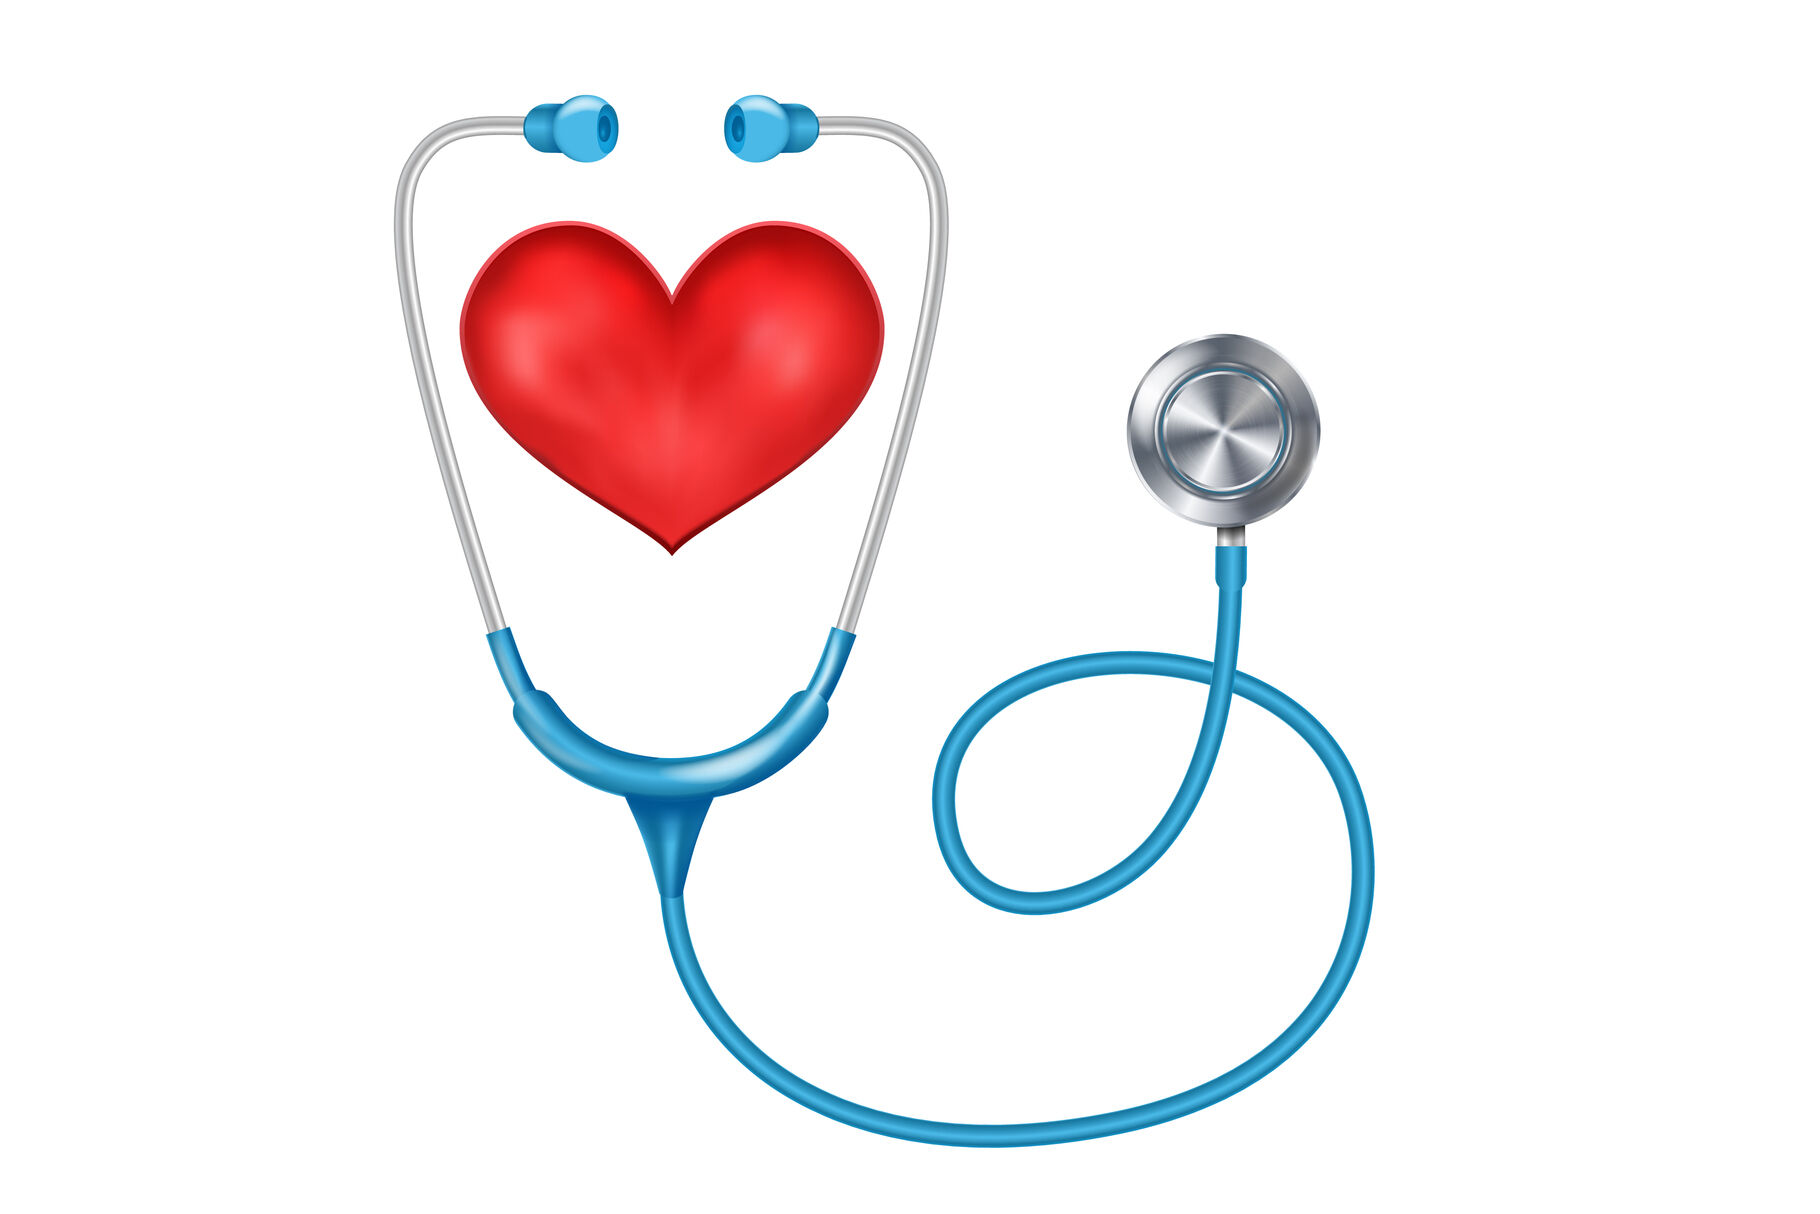 Heart health equipment